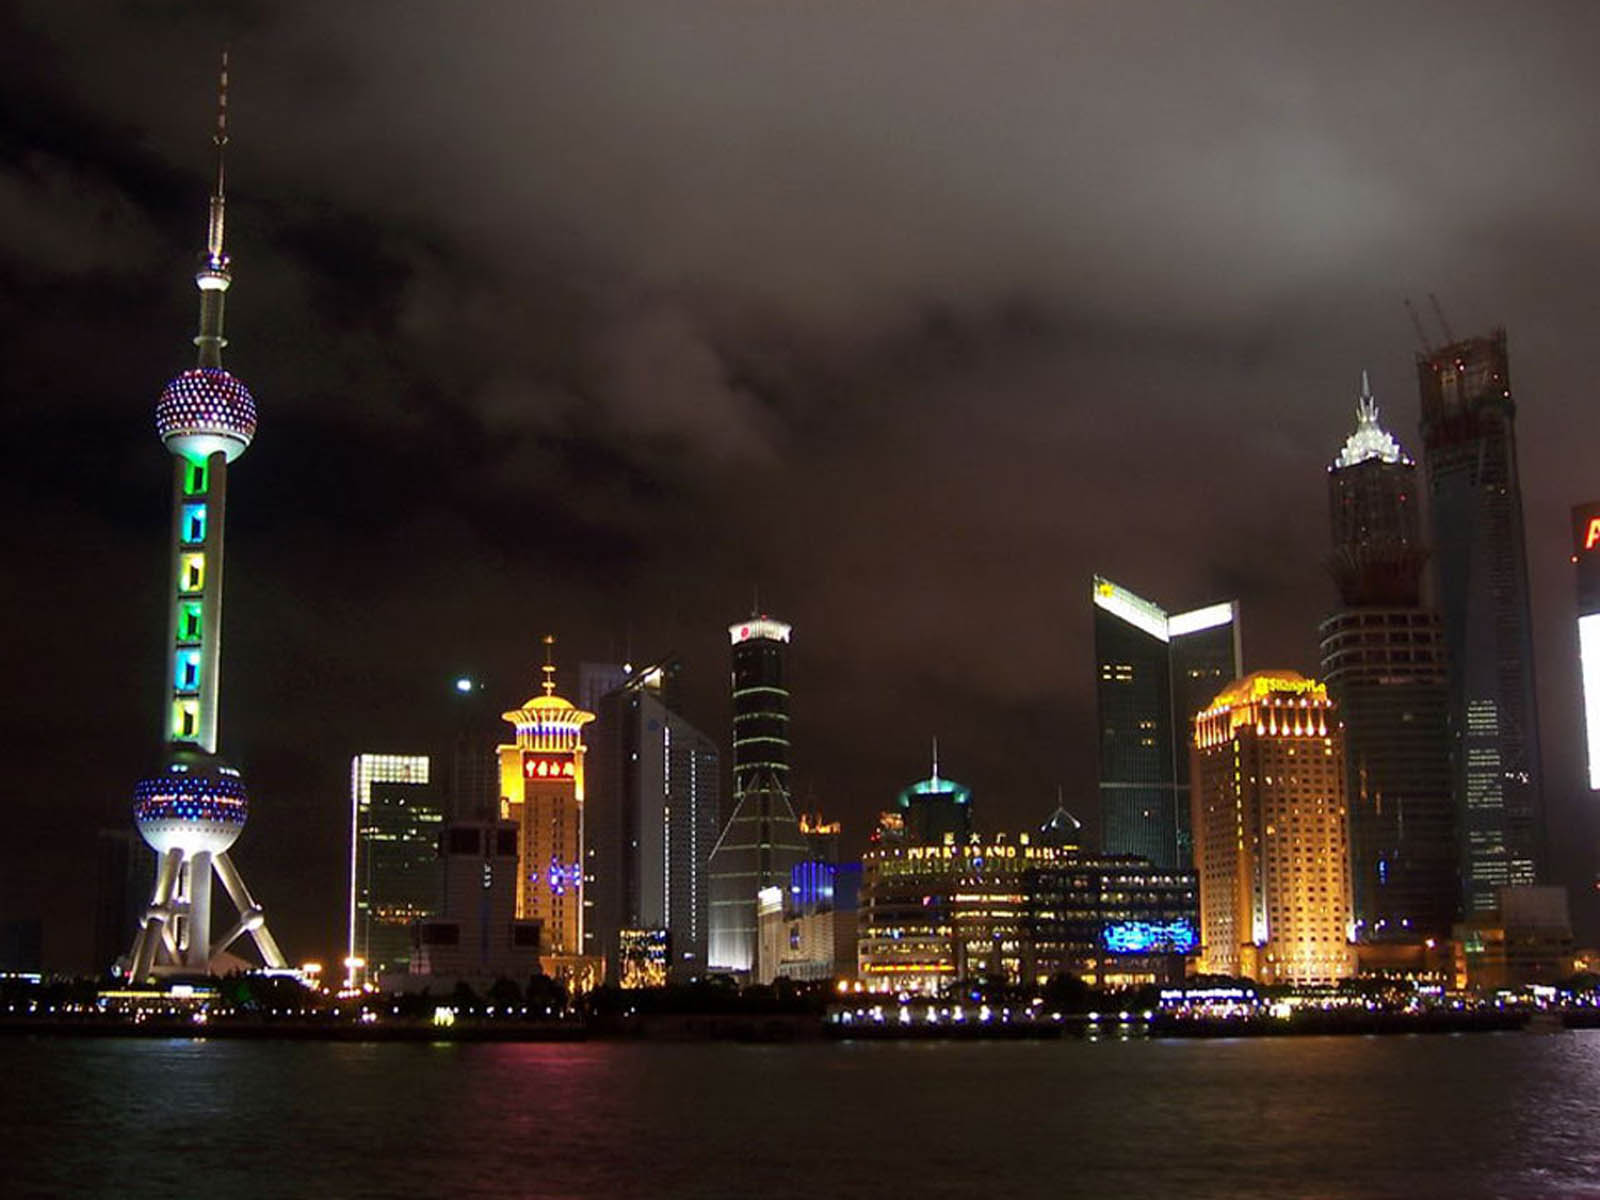 Tag China Shanghai Tv Tower Wallpaper Background Photos Image